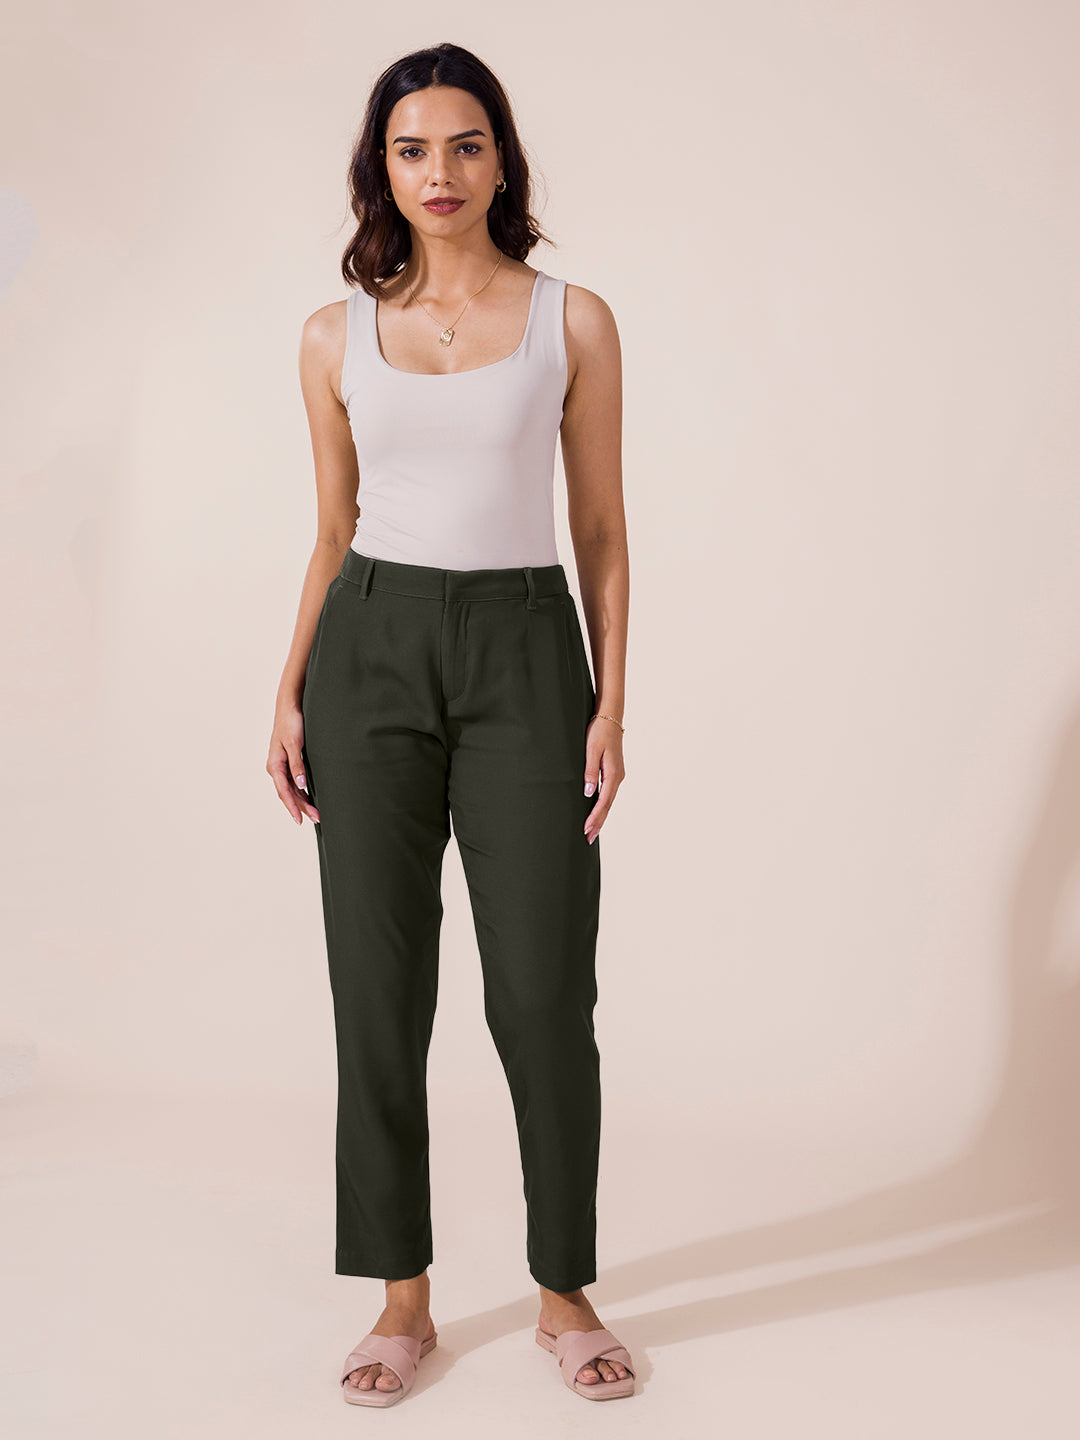 Mountain Hardwear Chockstone™ Women's Pull On Pant Regular - Second Hand  Trousers - Women's - Olive green - S